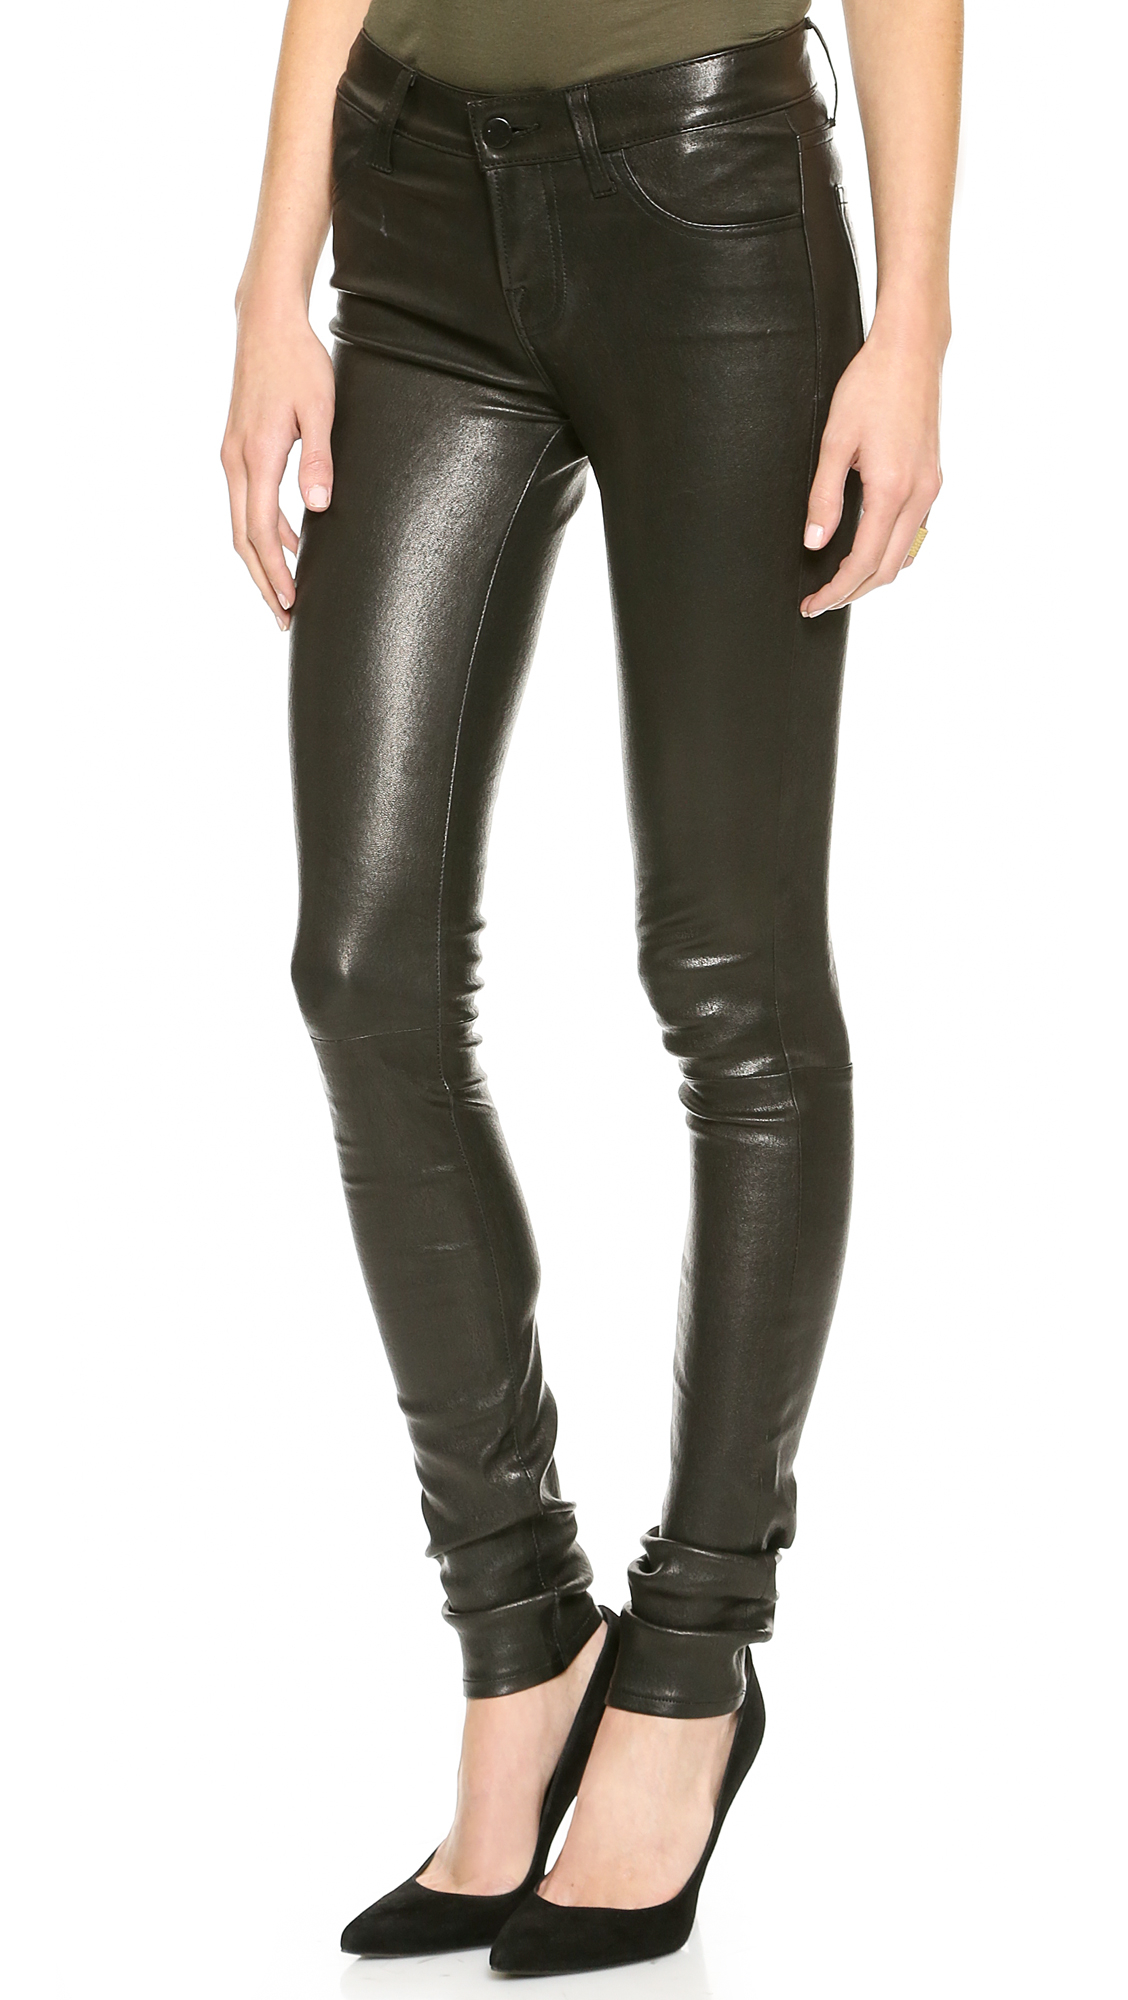 Lyst - J Brand L624 Stacked Leather Skinny Pants - Noir in Black